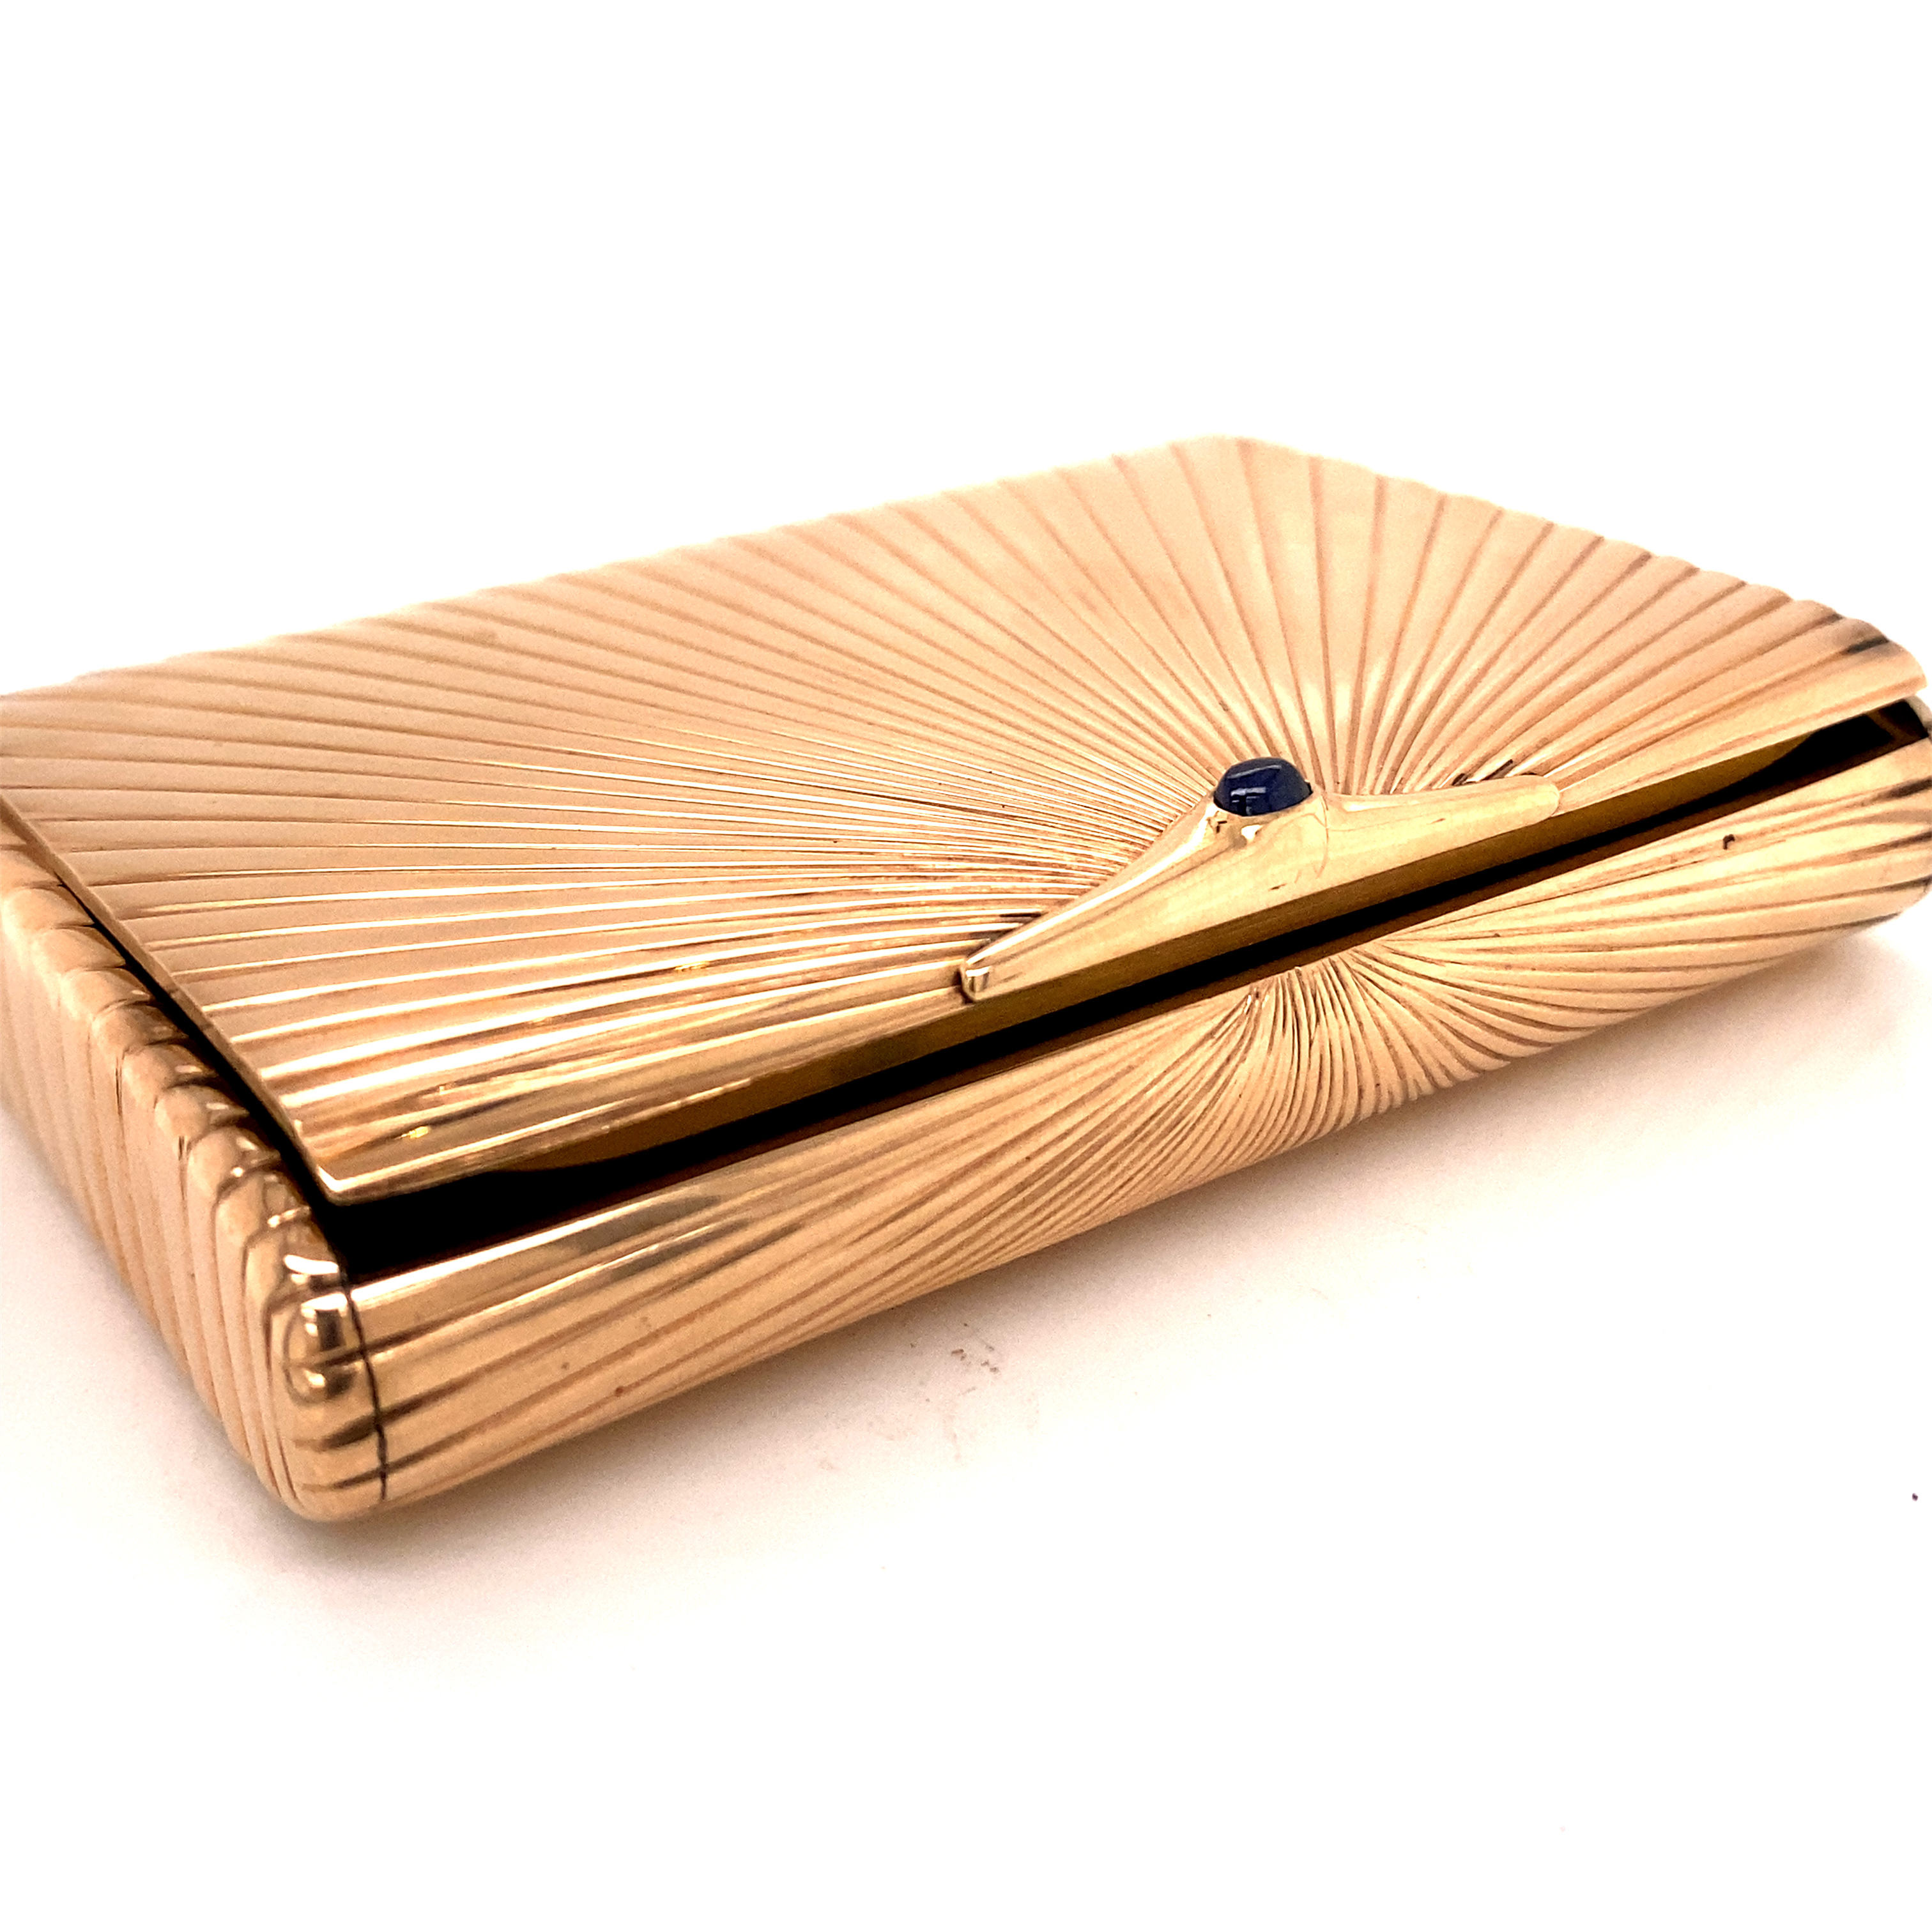 Gold Faberge Cigarette Case - Image 3 of 7